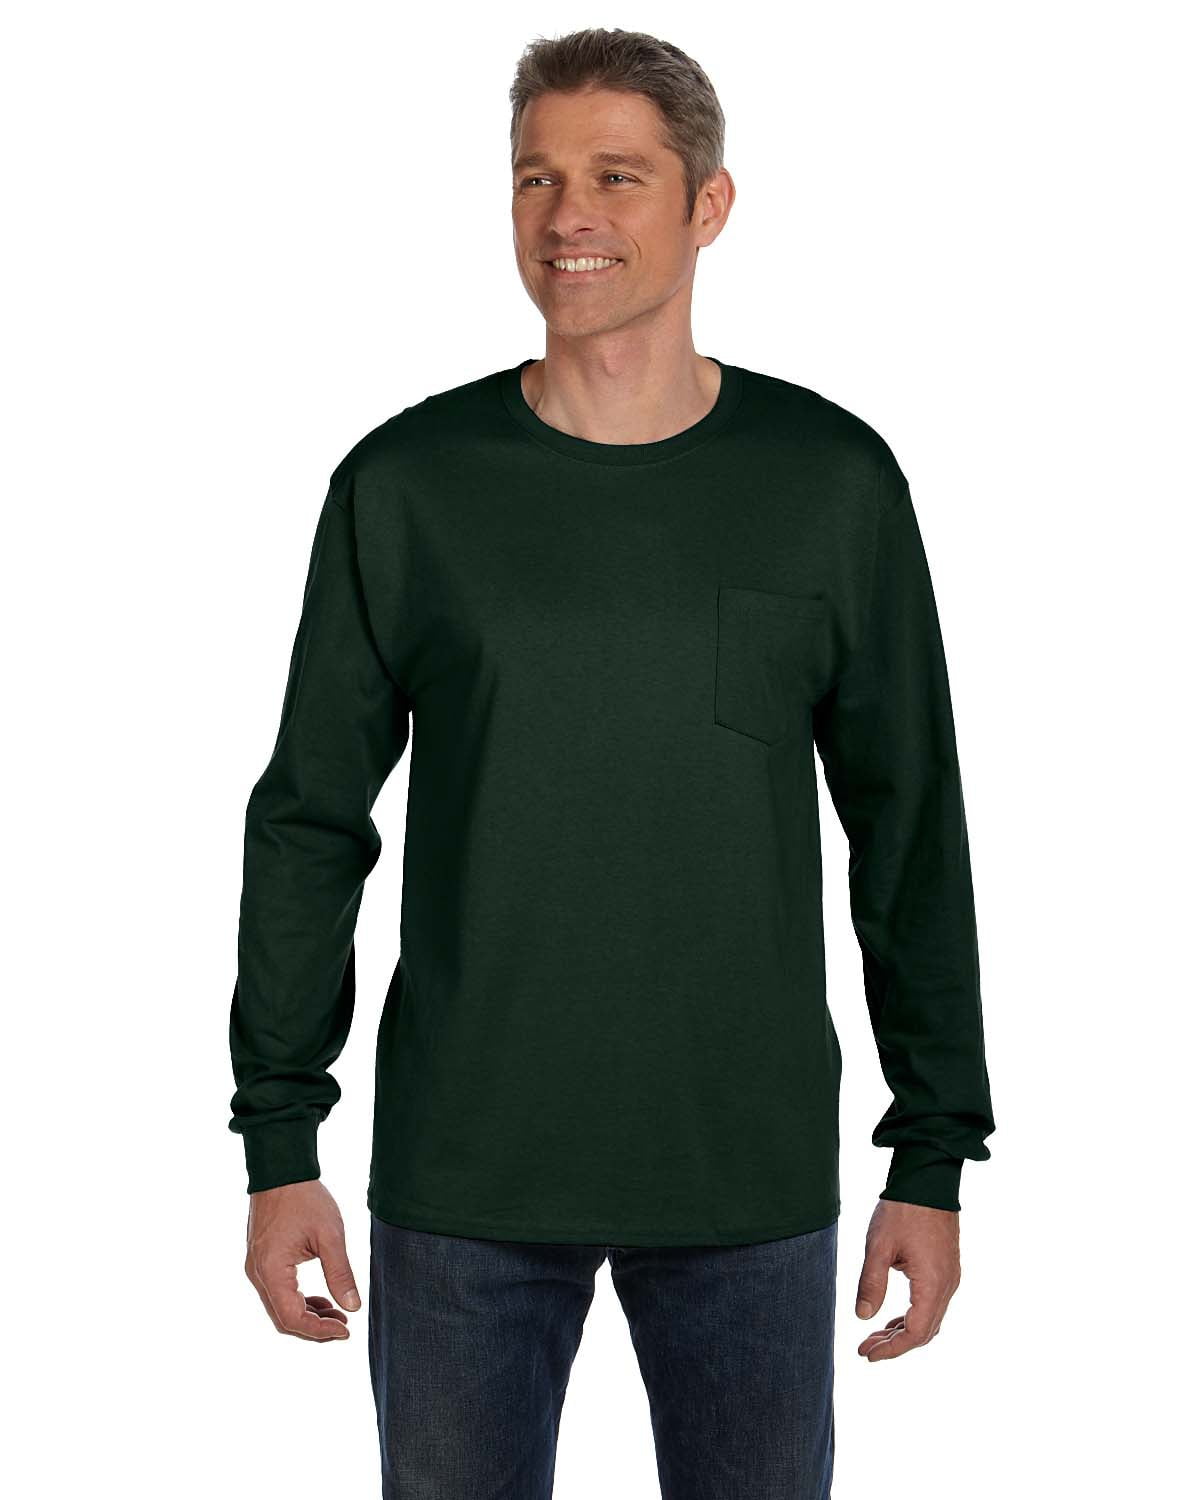 Hanes Tagless Long Sleeve T-Shirt with a Pocket